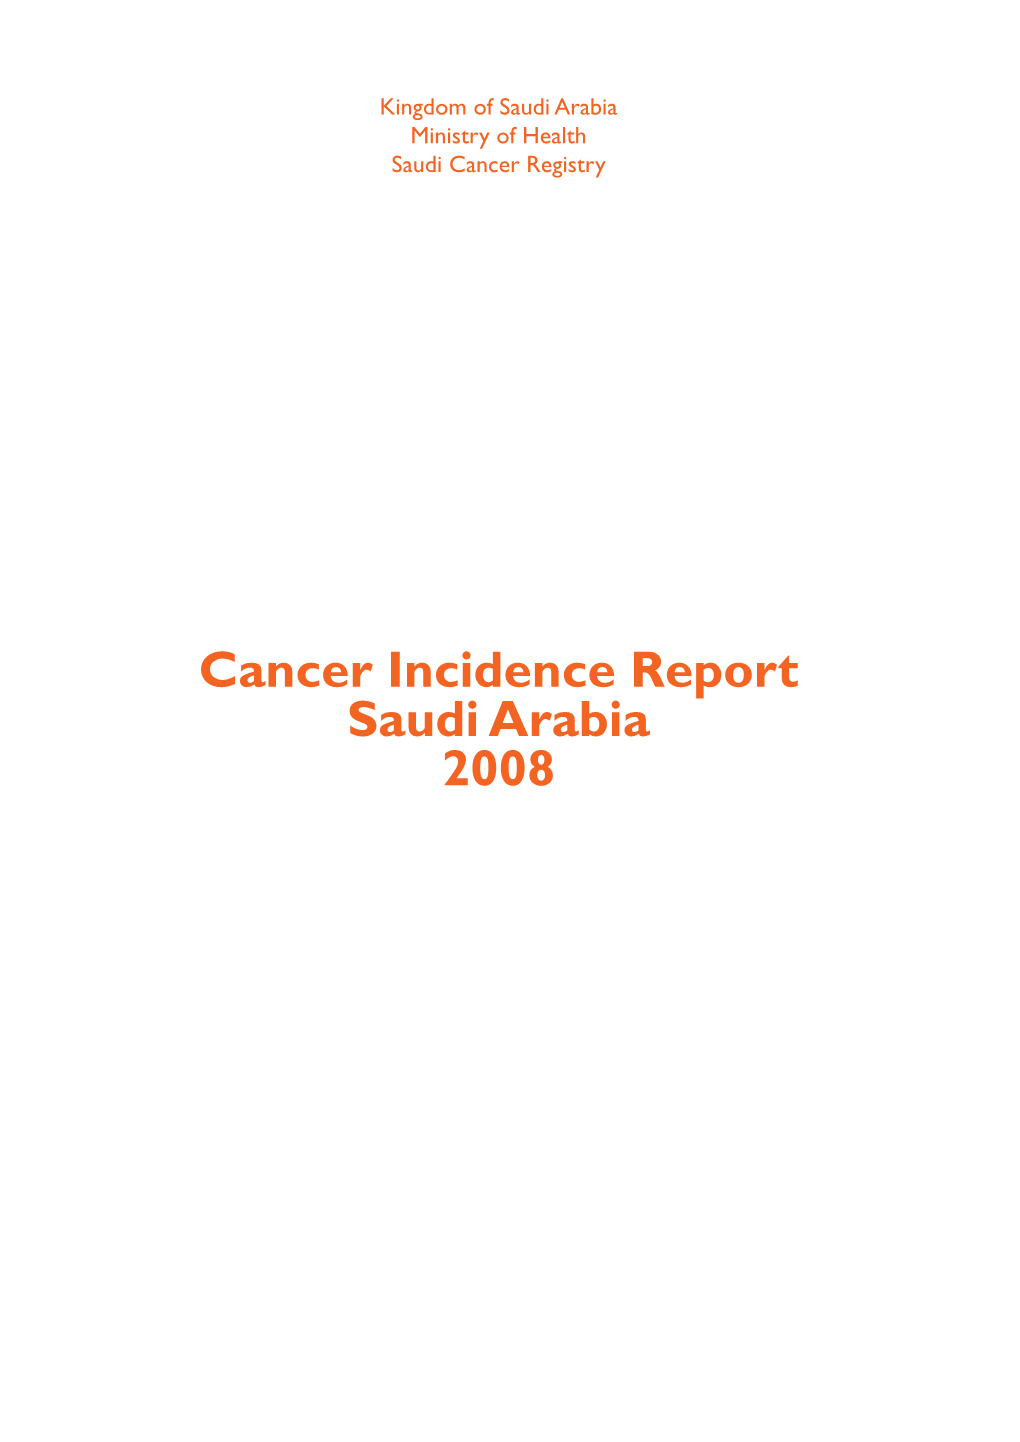 Cancer Incidence Report Saudi Arabia 2008